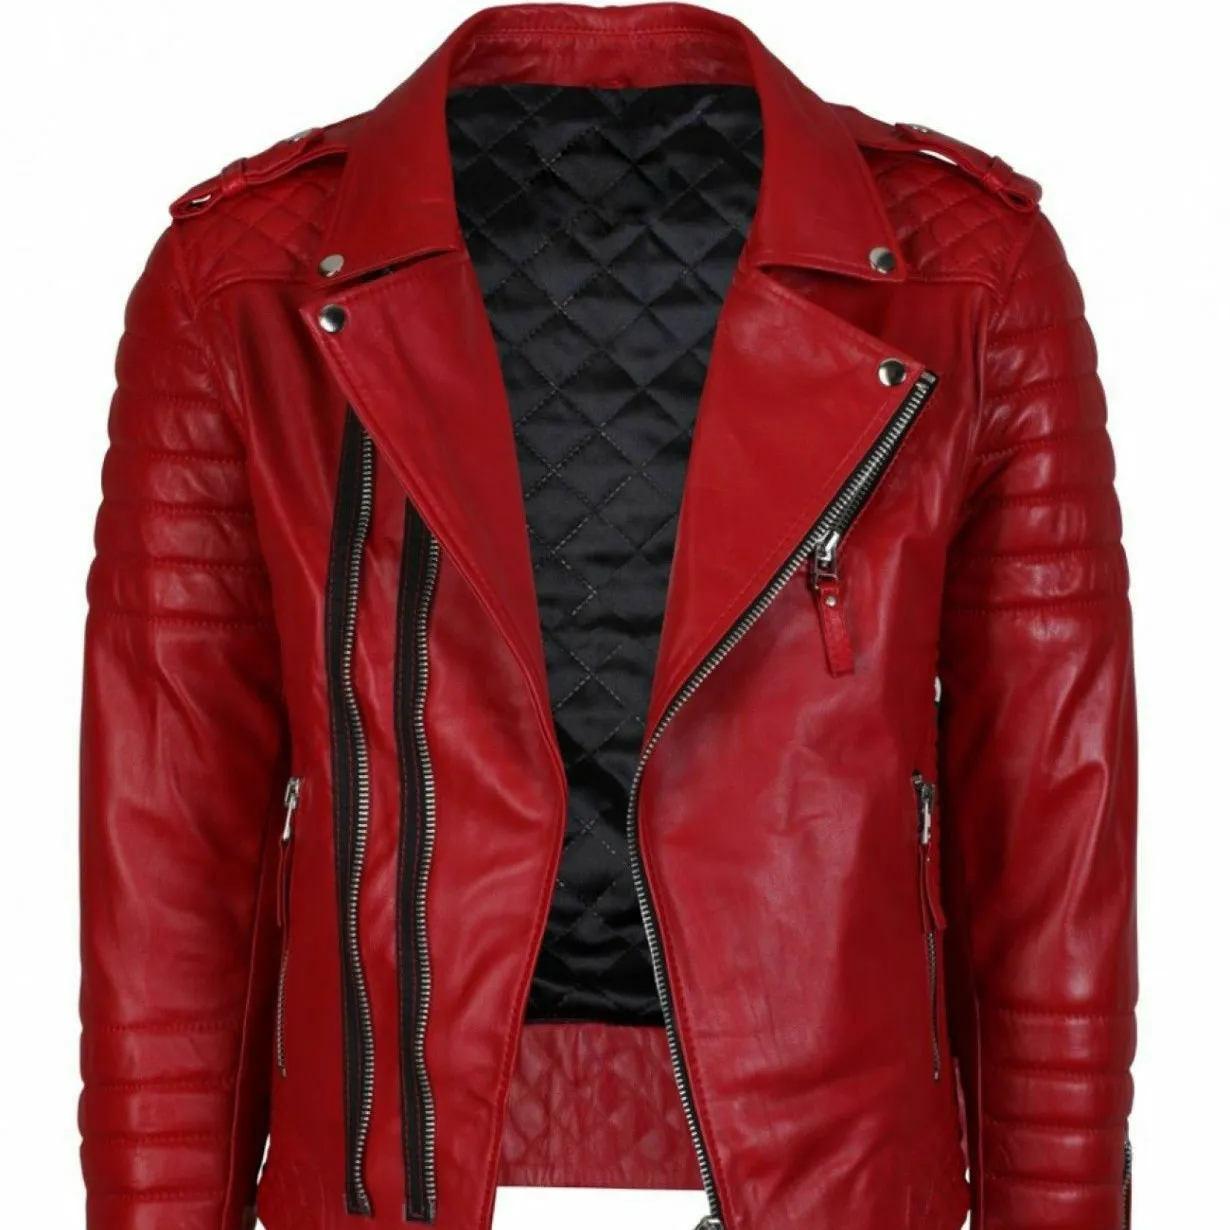 Men's Leather Jacket Red 100% Real Lambskin Biker Motorcycle jacket